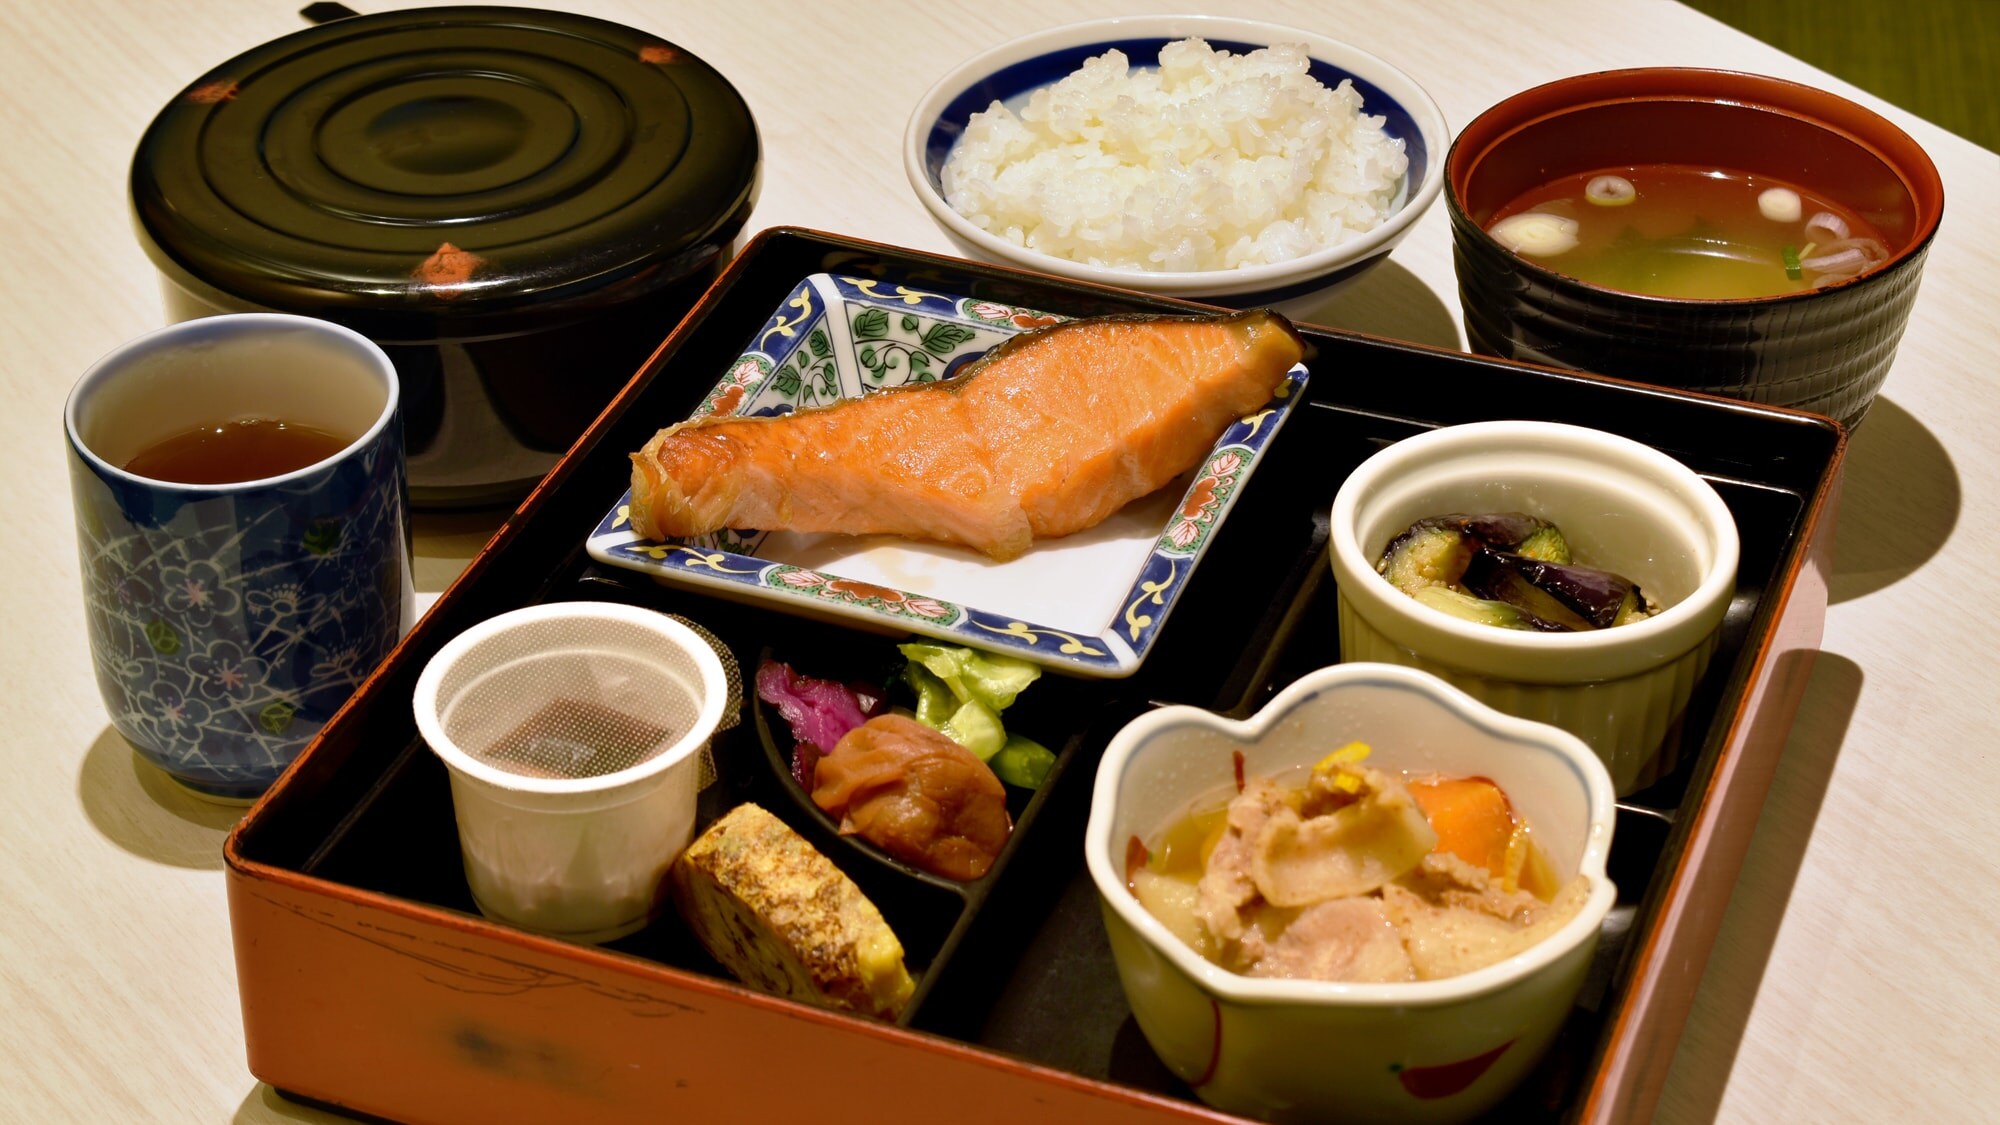 [Breakfast] Japanese breakfast of grilled fish set meal